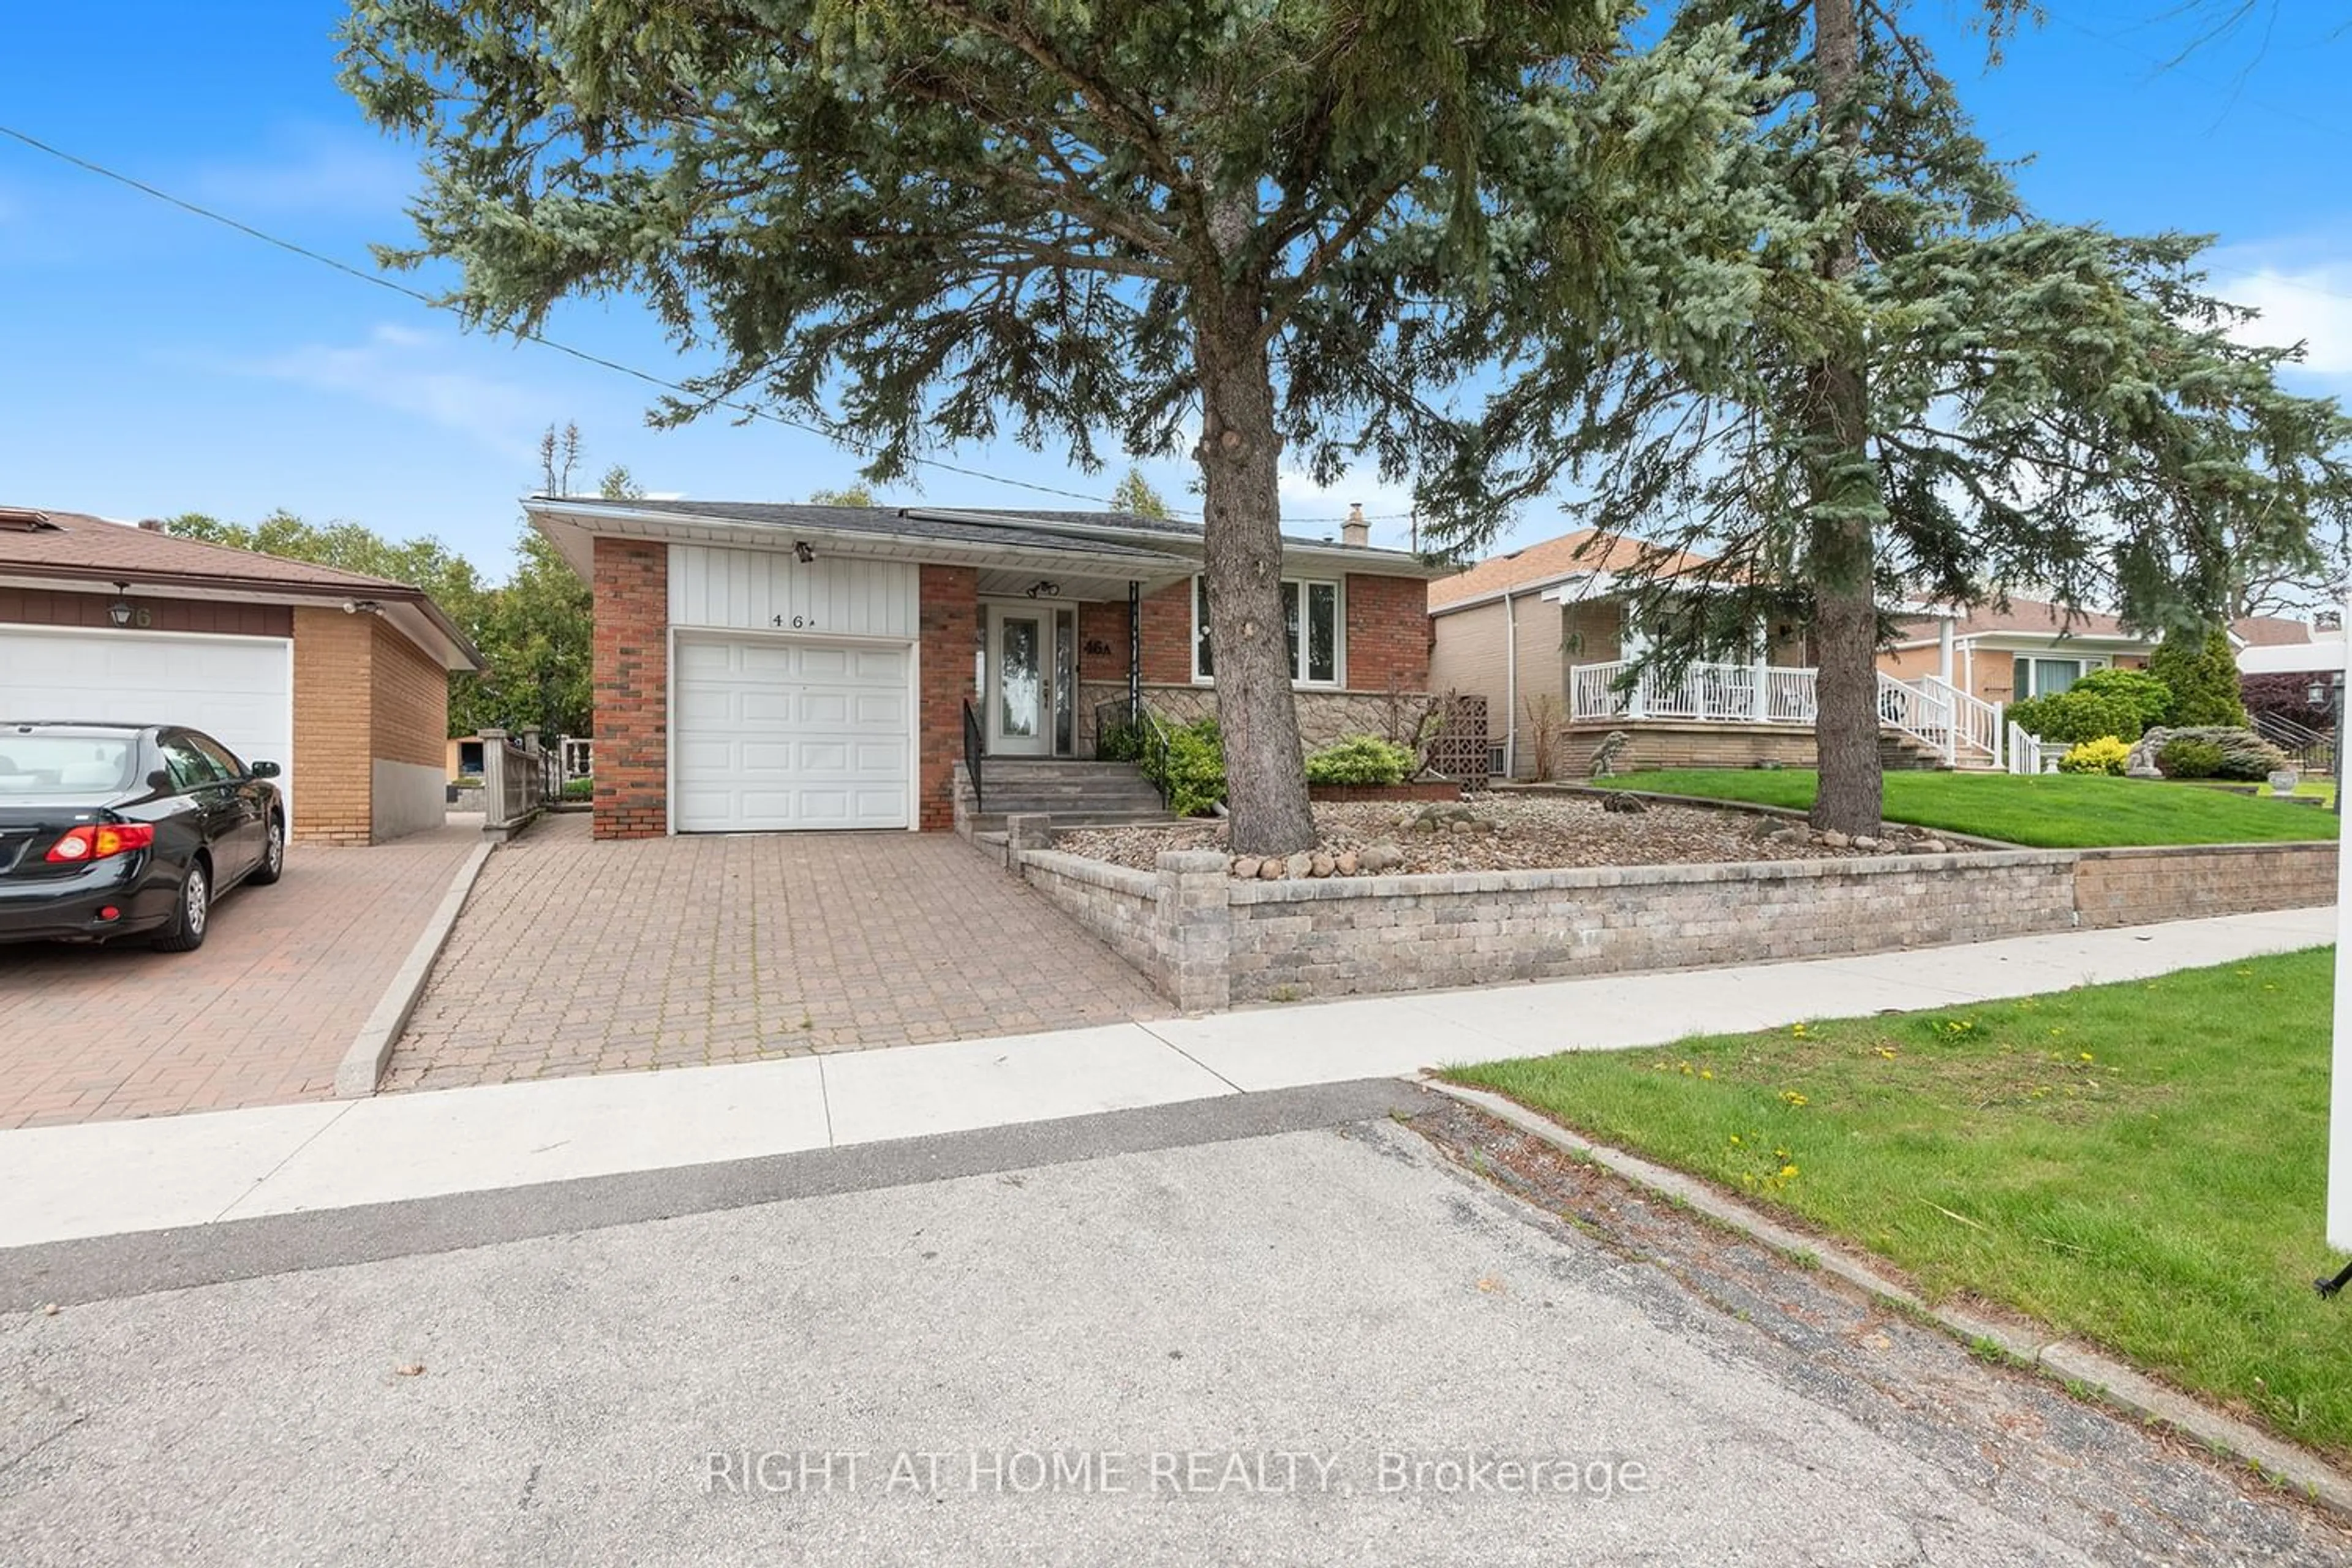 Home with brick exterior material for 46 A Courton Dr, Toronto Ontario M1R 1K8